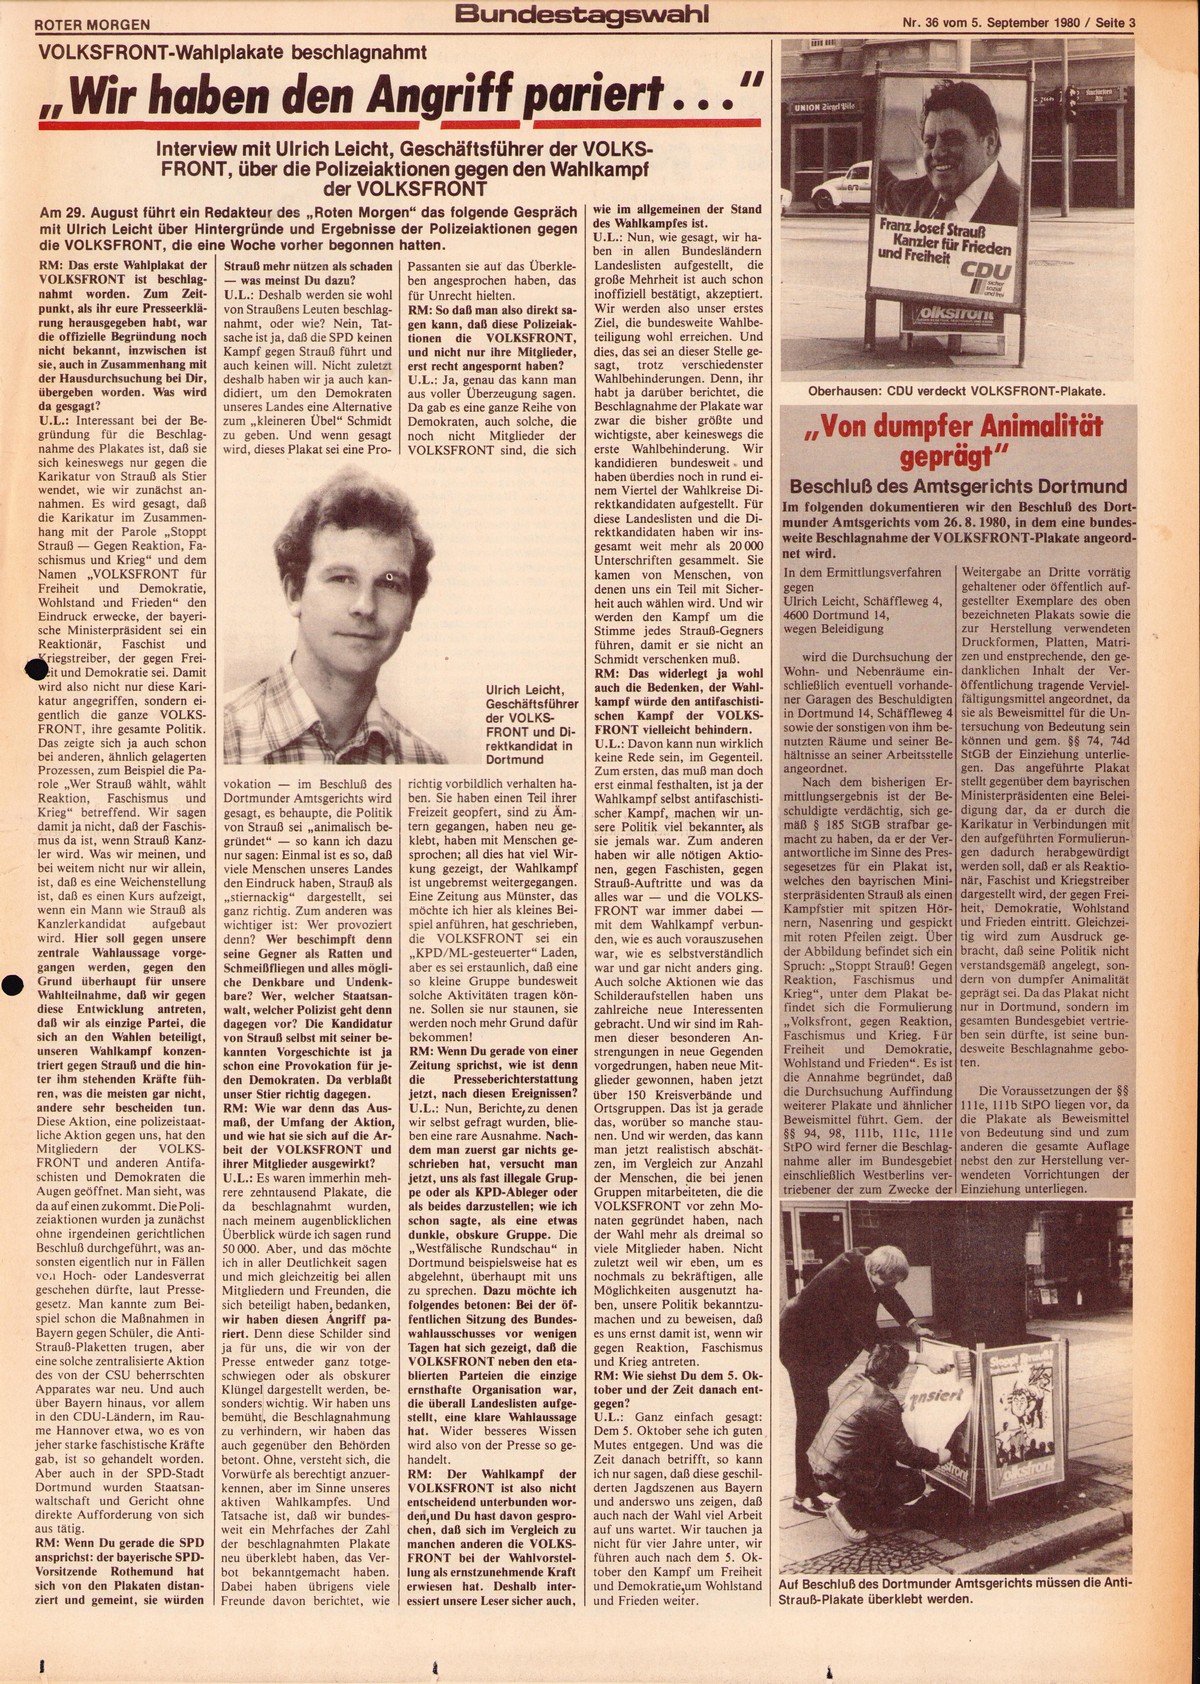 Roter Morgen, 14. Jg., 5. September 1980, Nr. 36, Seite 3